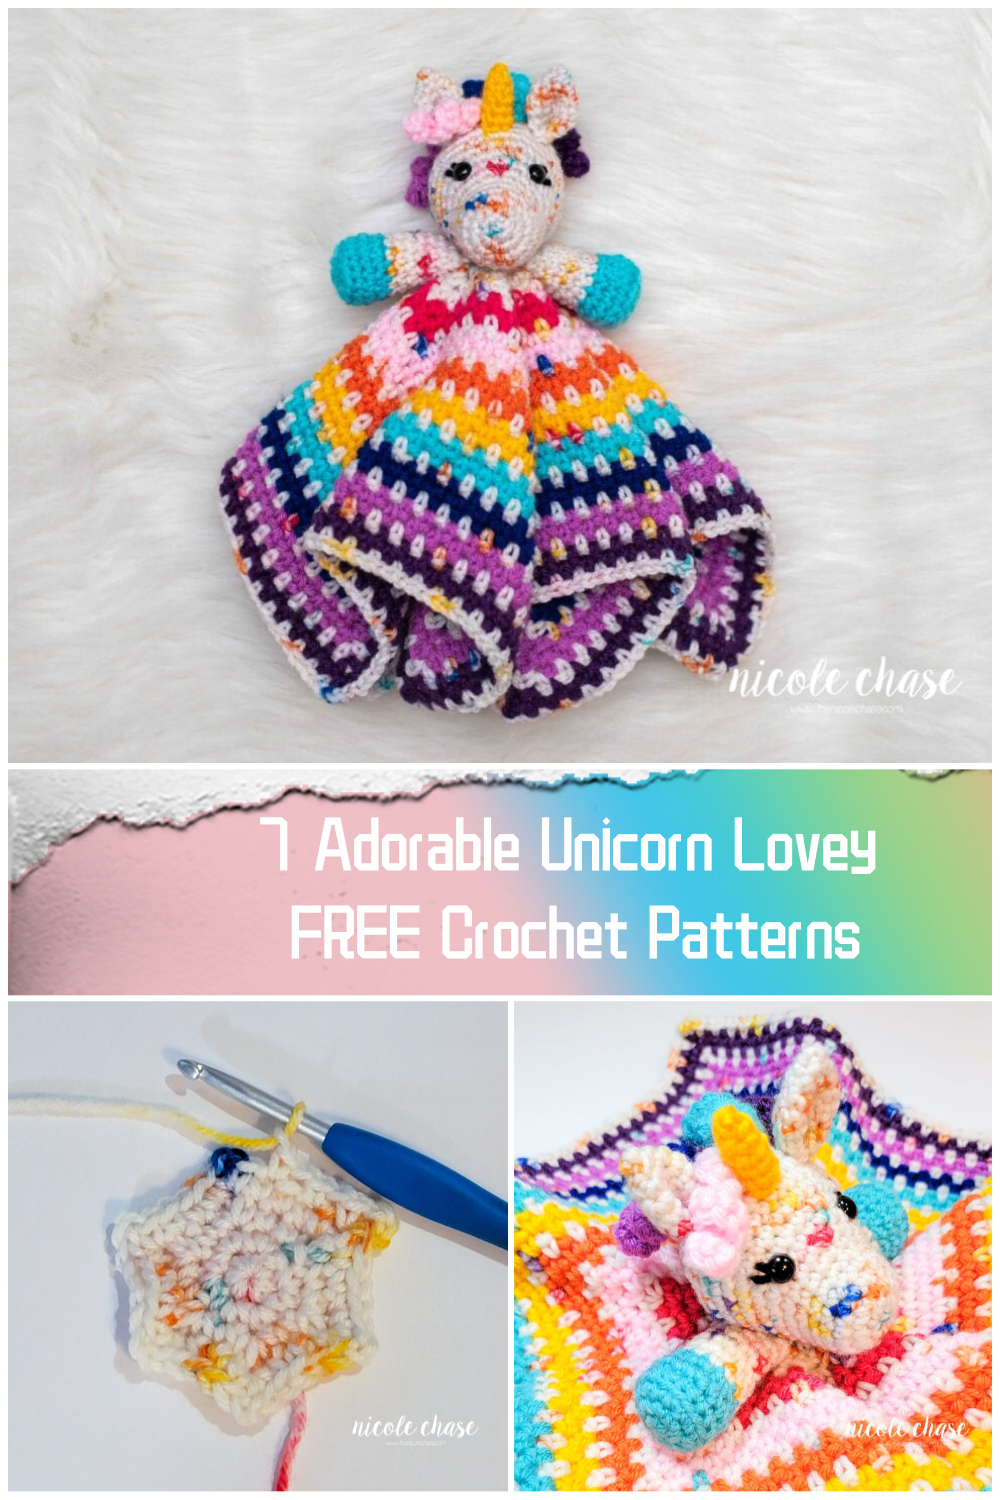 7 Unicorn Lovey FREE Crochet Patterns